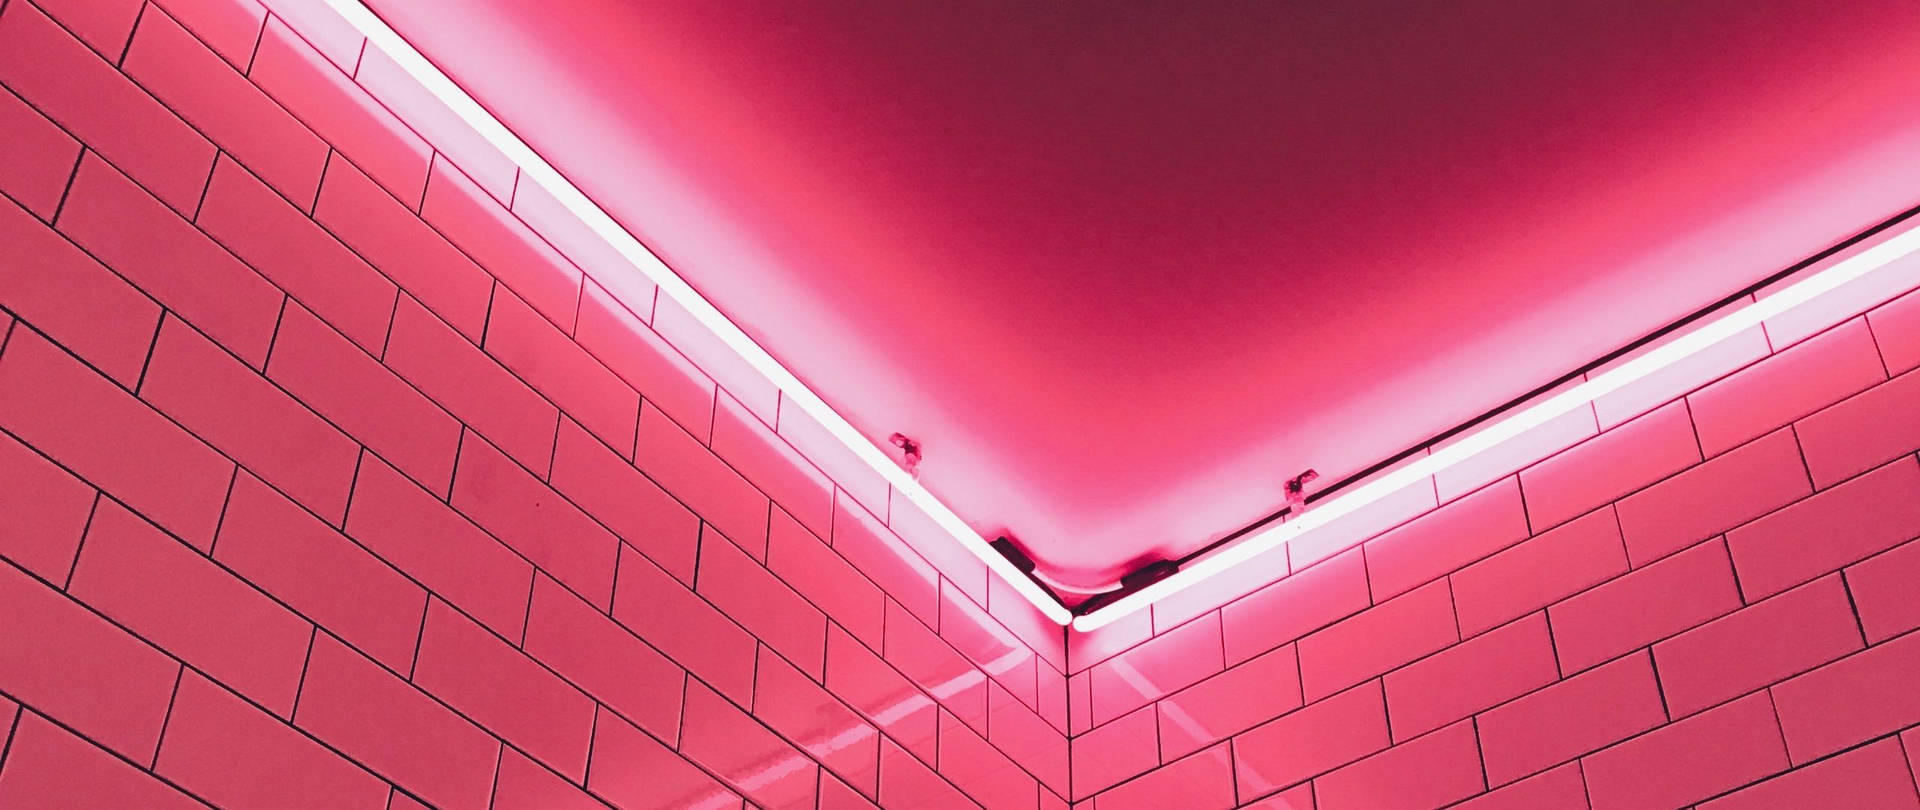 Cool Aesthetic Pink Tile Wallpaper